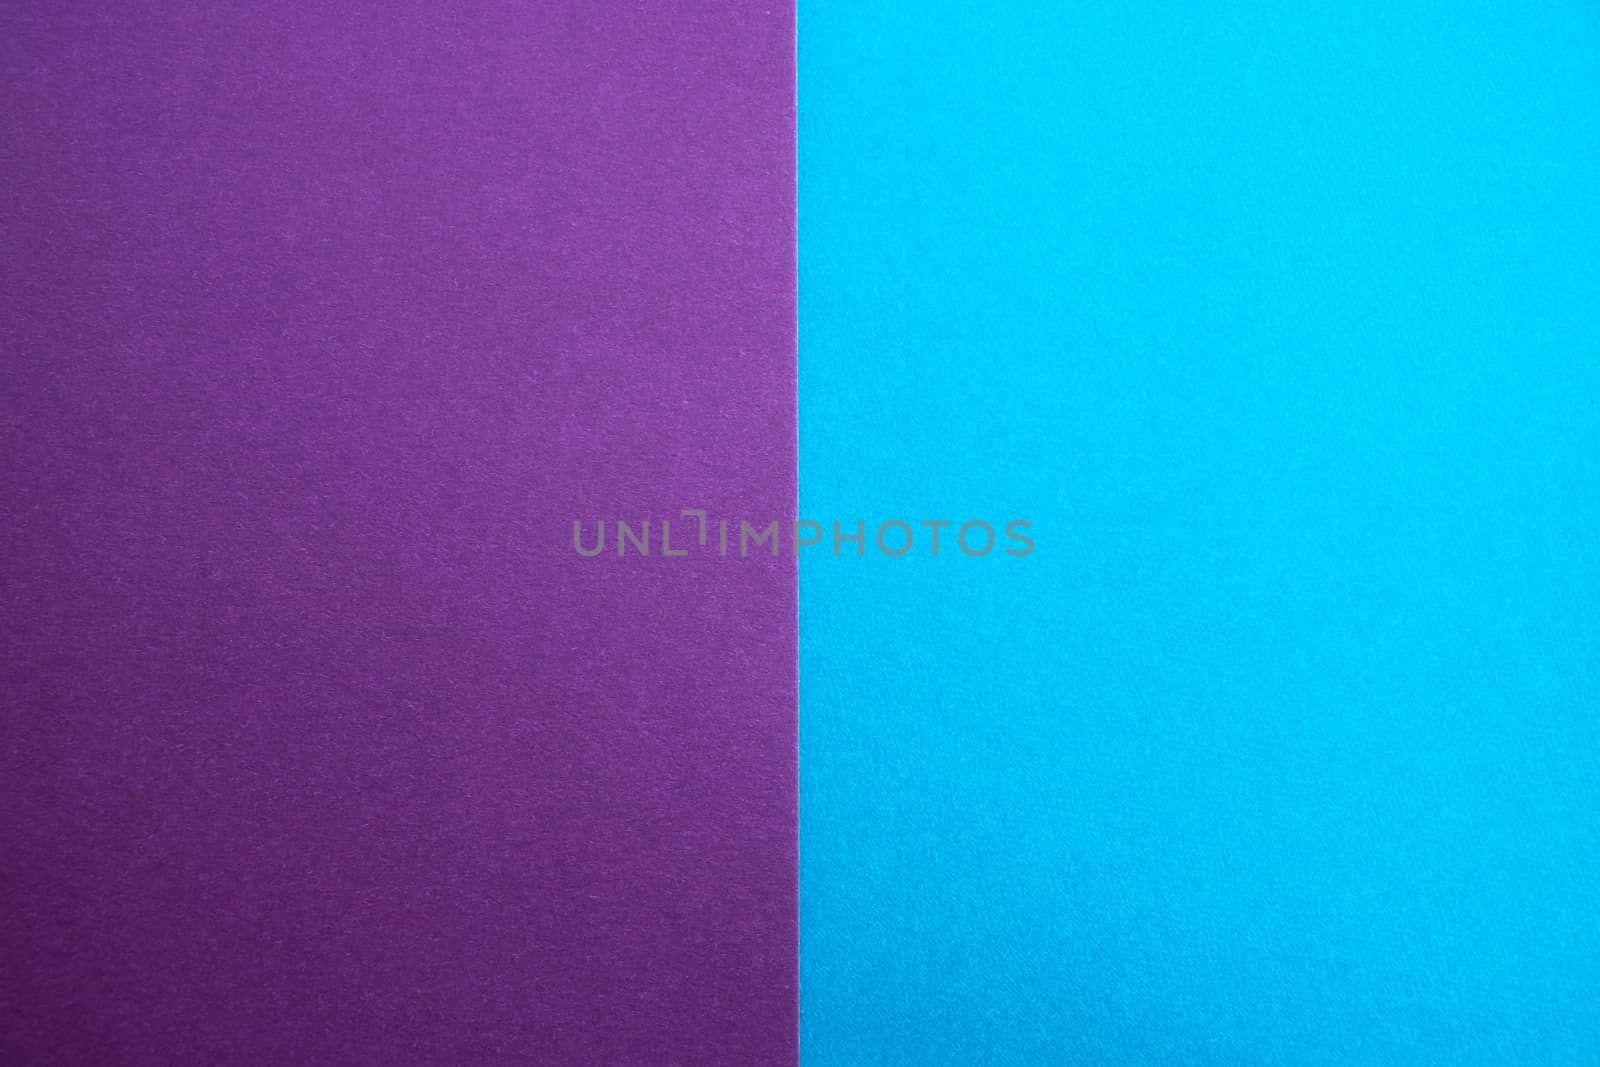 blue-purple matte suede background, close-up. Velvety texture by lapushka62